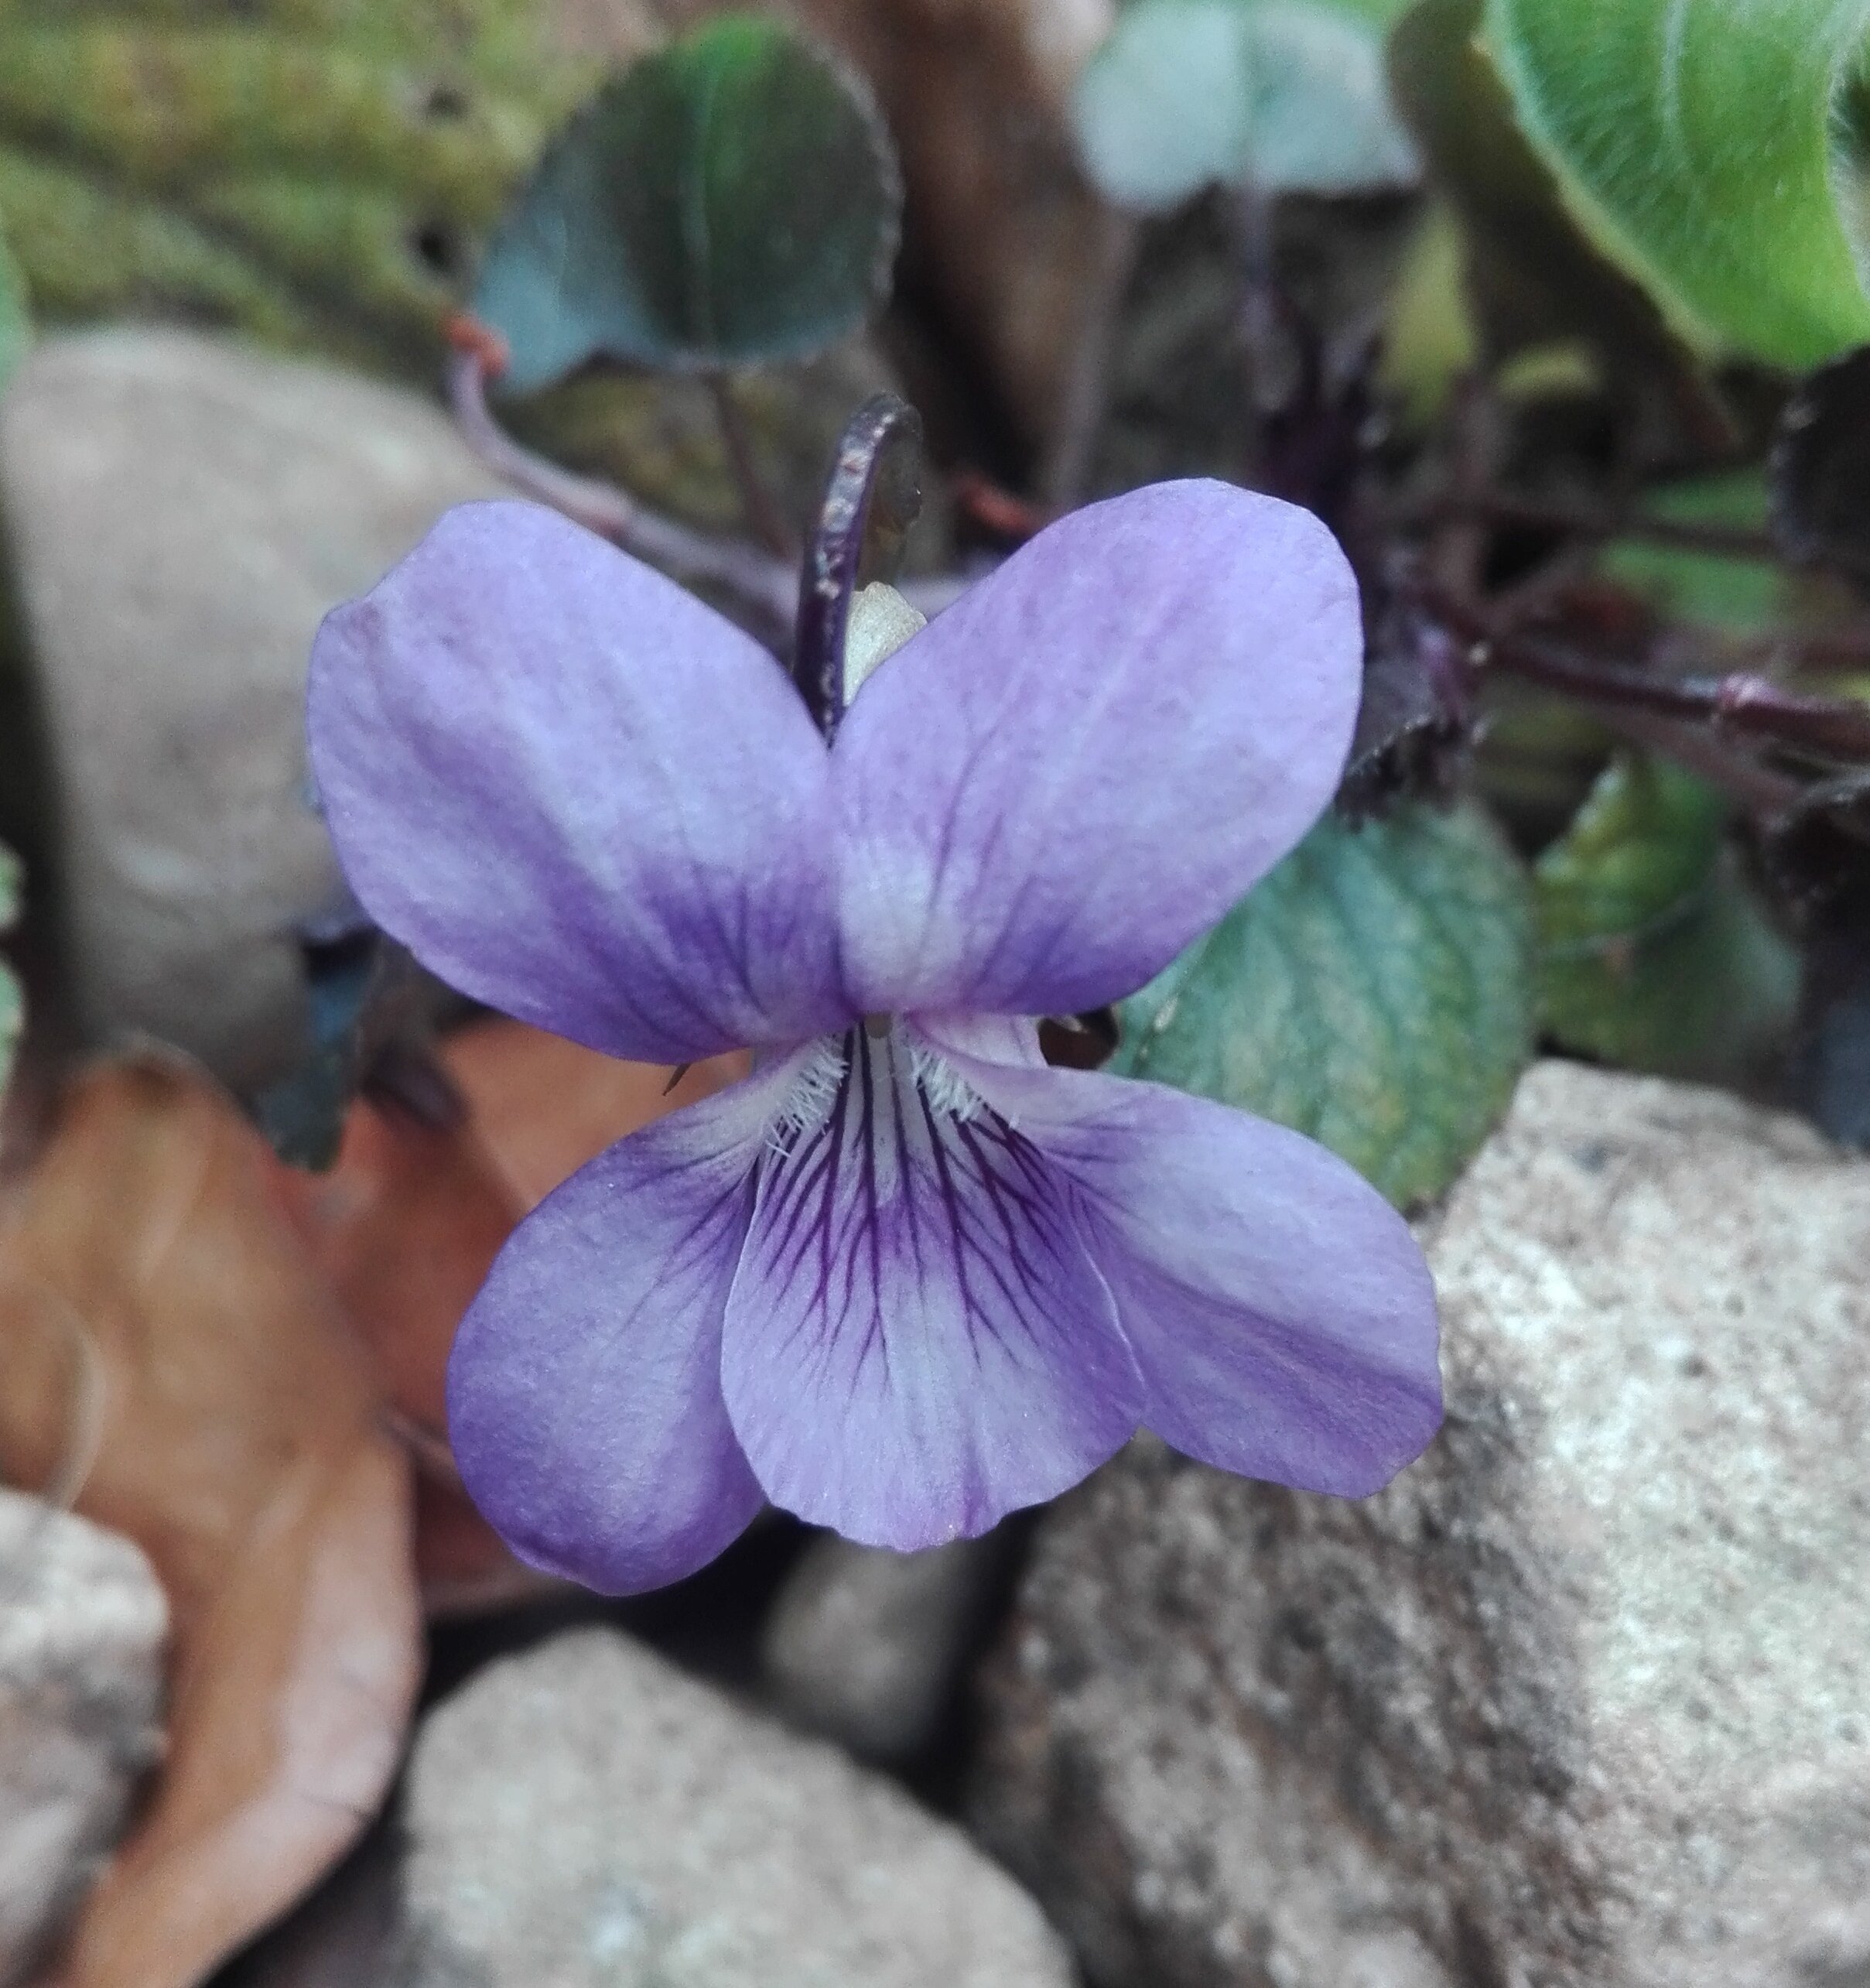 #26 Common Dog Violet (Viola riviniana)